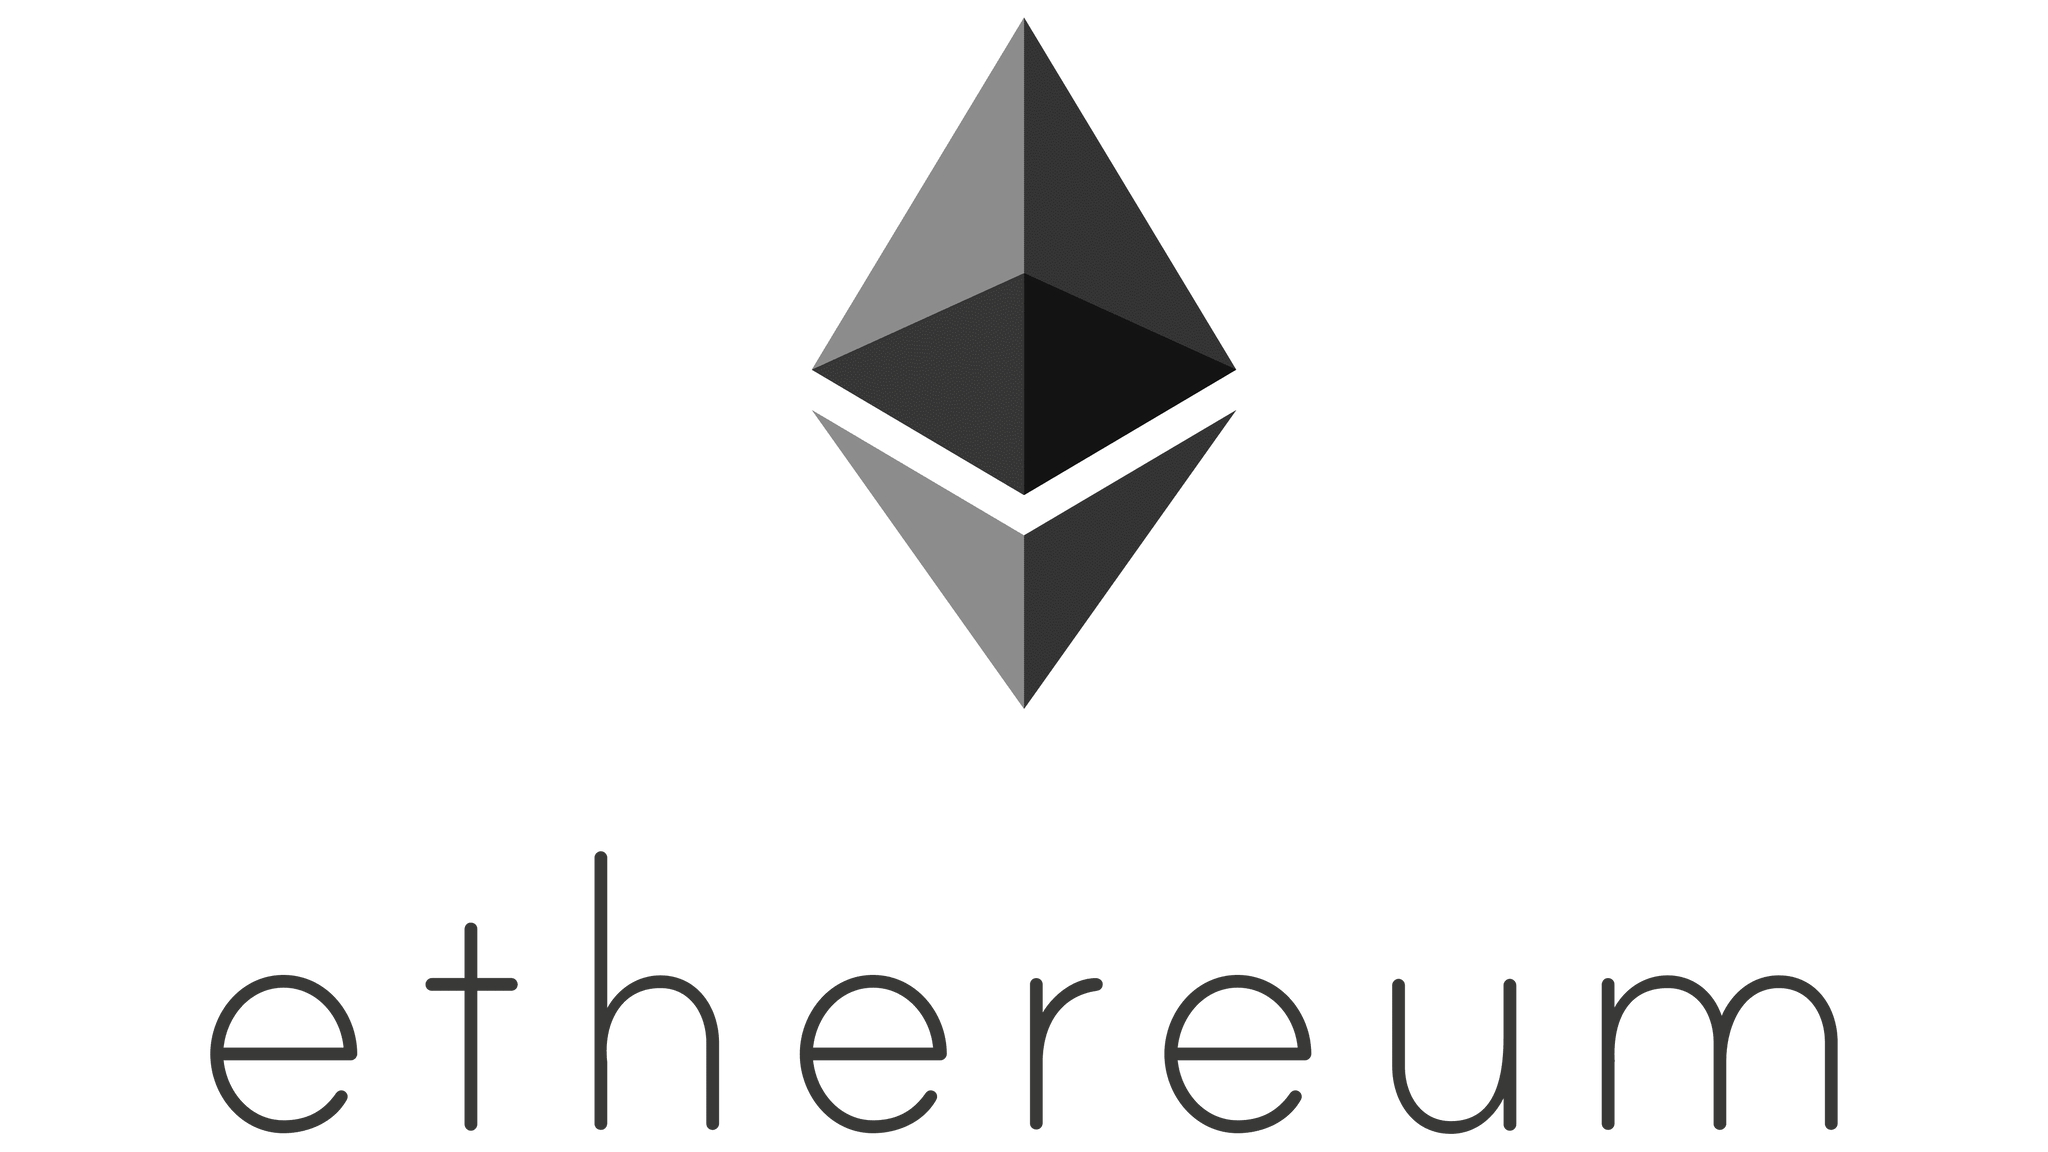 Ethereum: A Blockchain-Based System